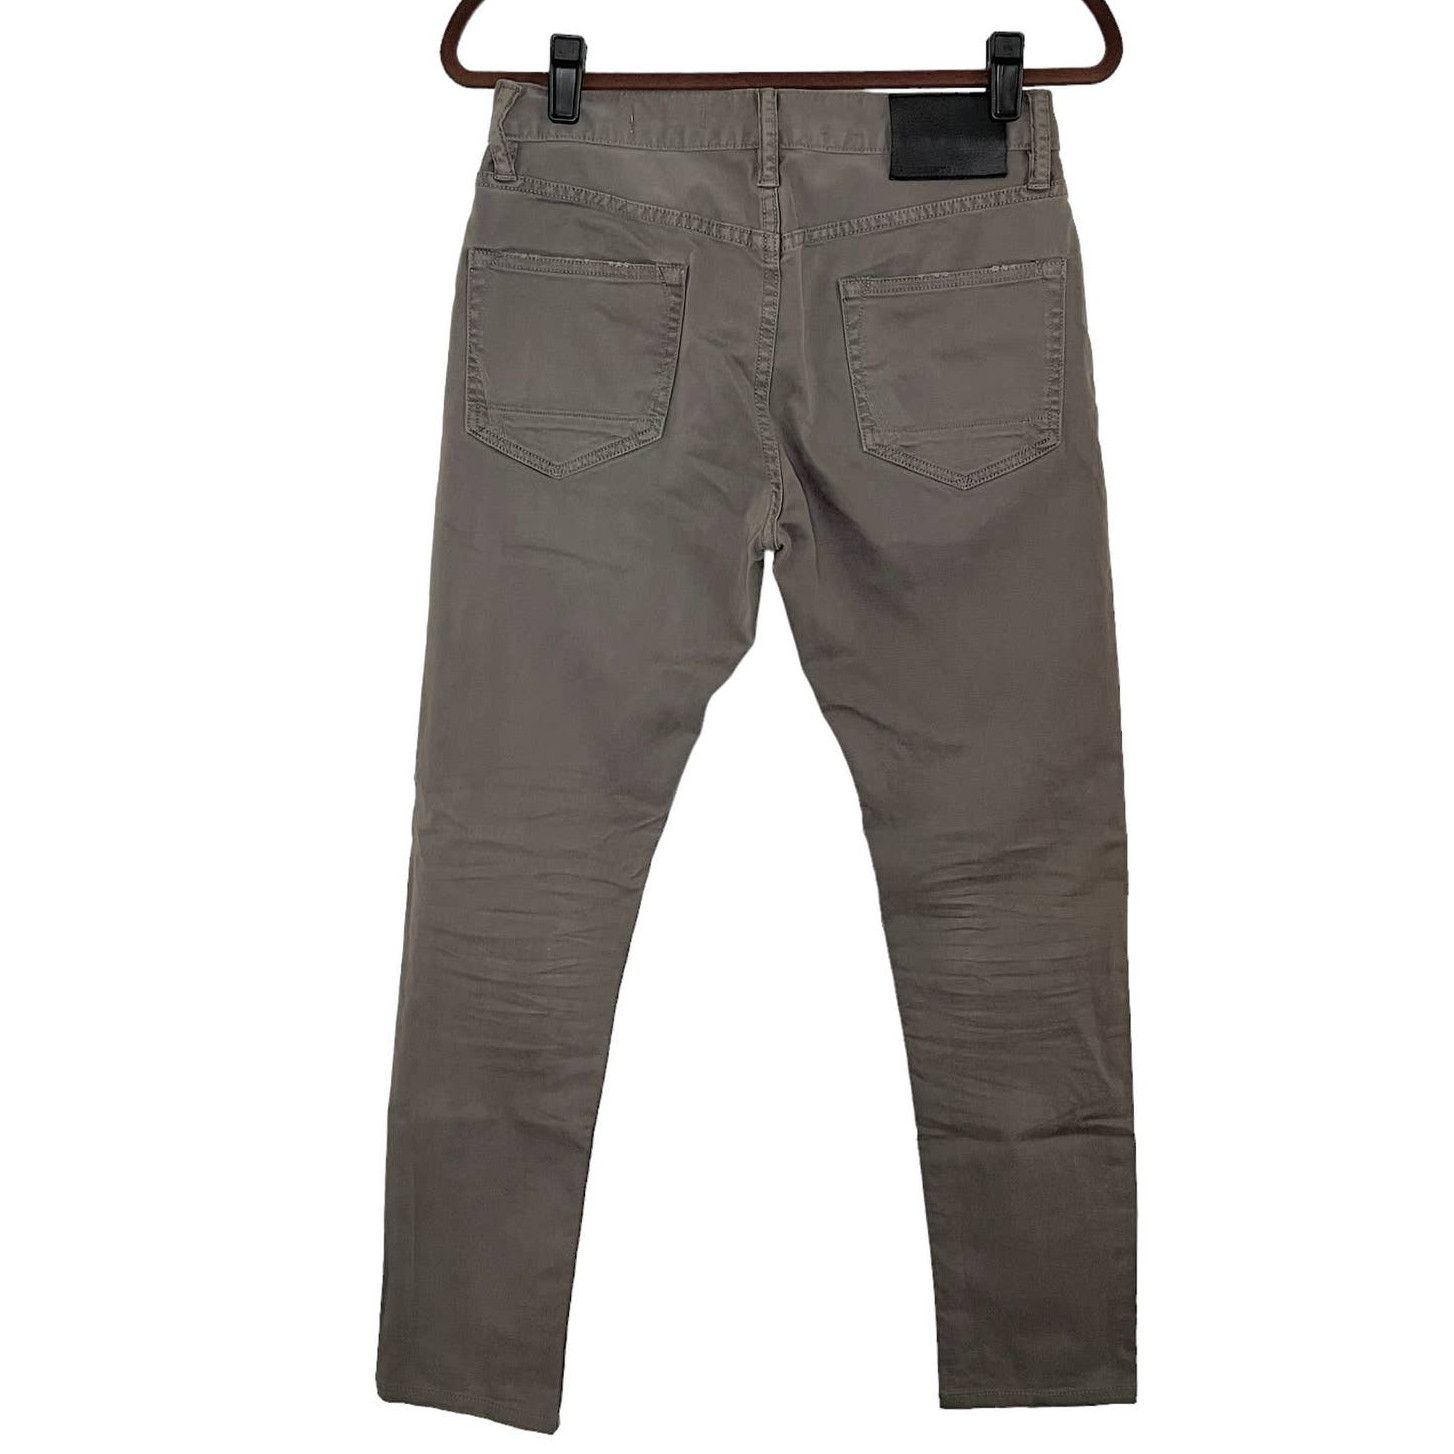 Allsaints AllSaints Size 28 Slate Gray Cotton Jeans Button Fly Size US 28 / EU 44 - 4 Thumbnail